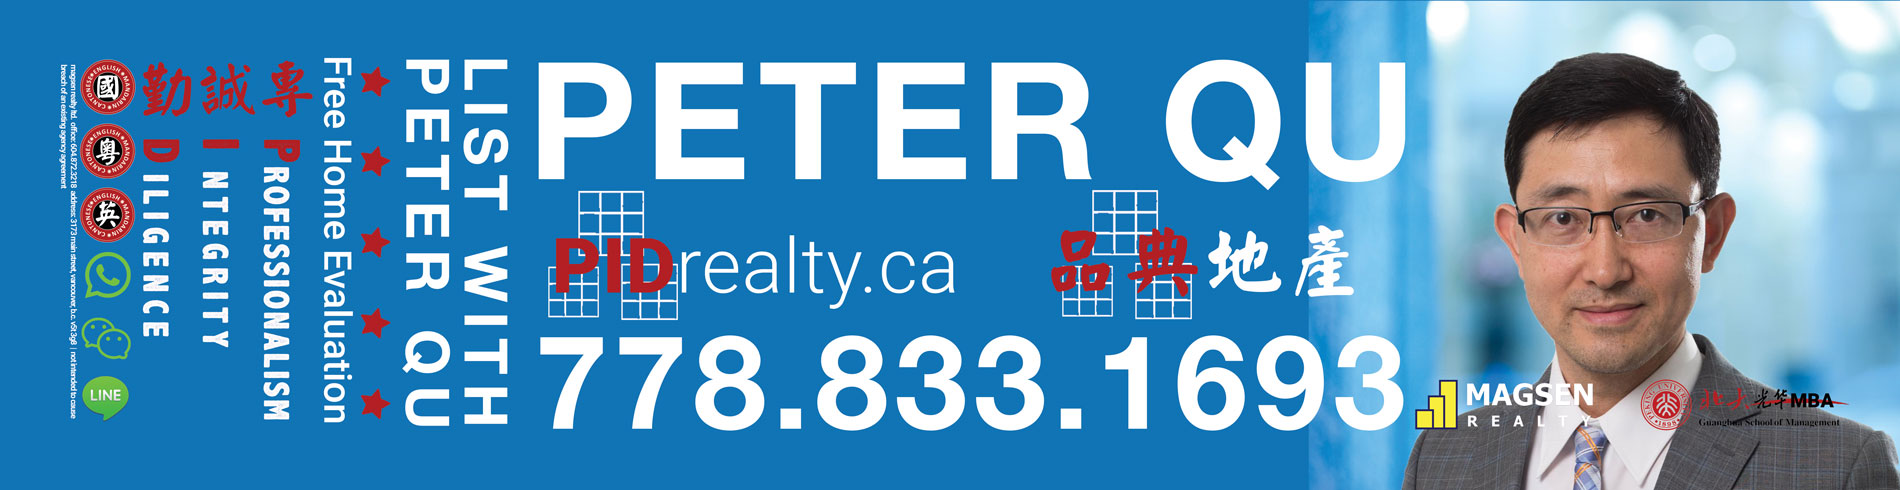 Greater Vancouver Surrey PID REALTOR PETER QU